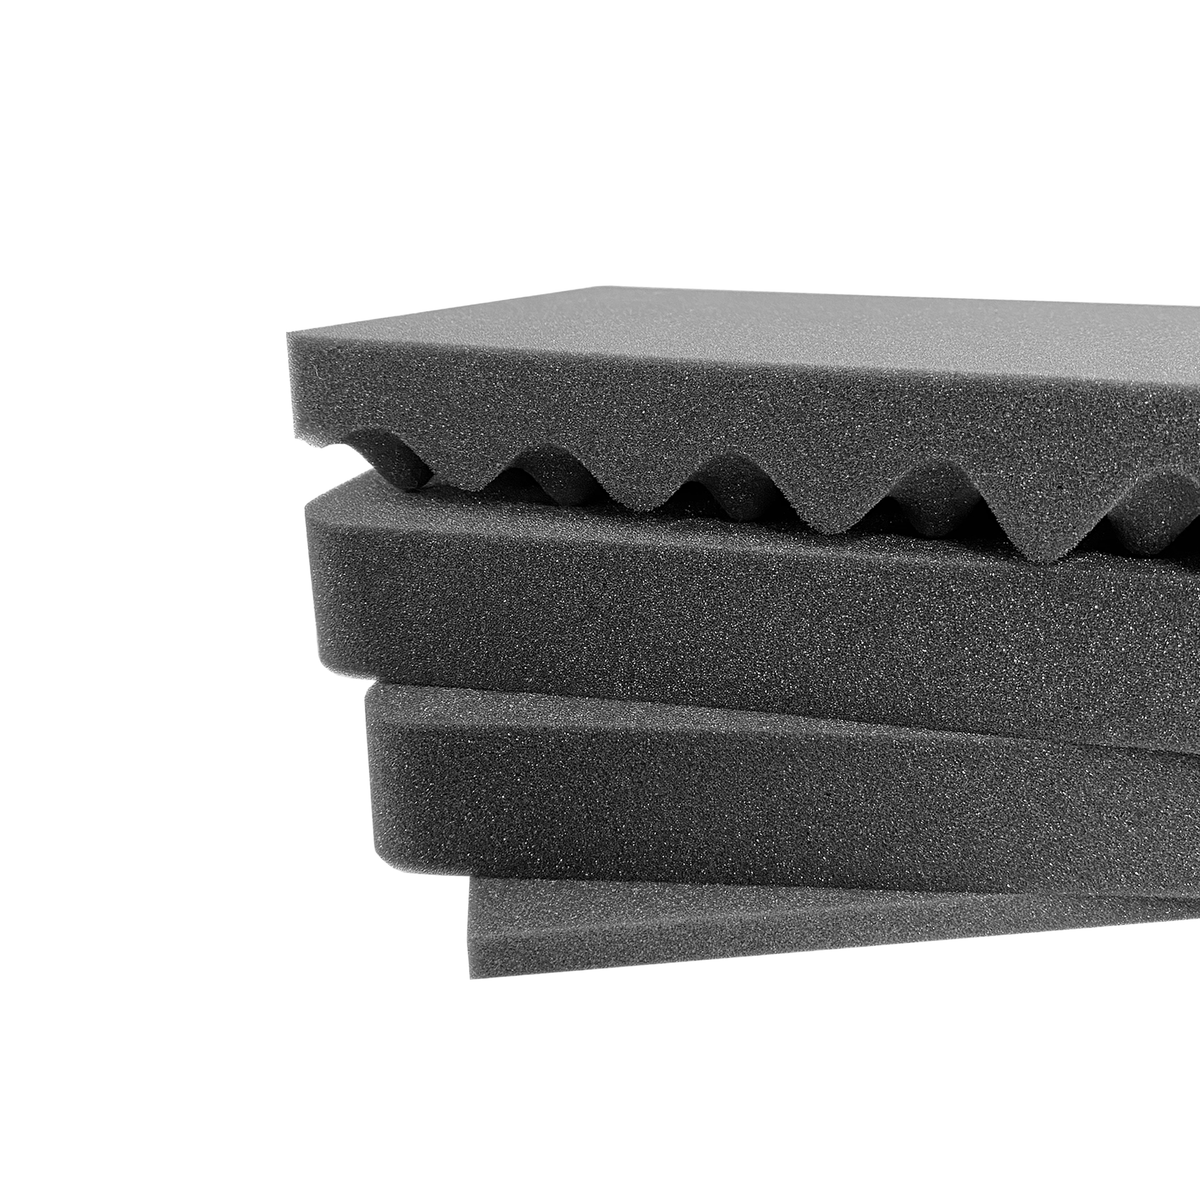 5.11 Tactical Hard Case 42 inch Replacement Foam Insert (1 Piece)